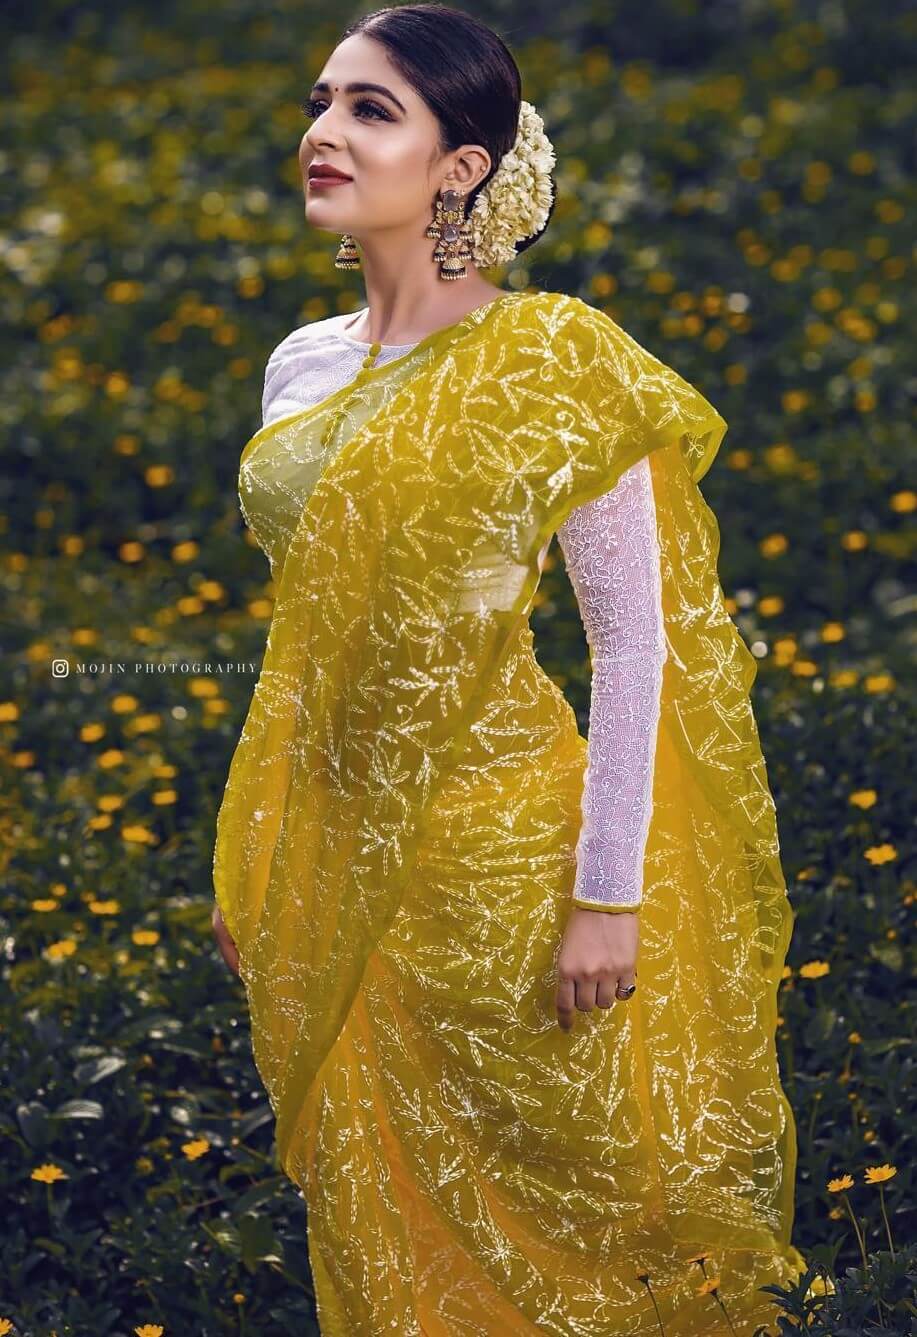 Malavika Wales Dazzles In Perfect Yellow Embellished Saree